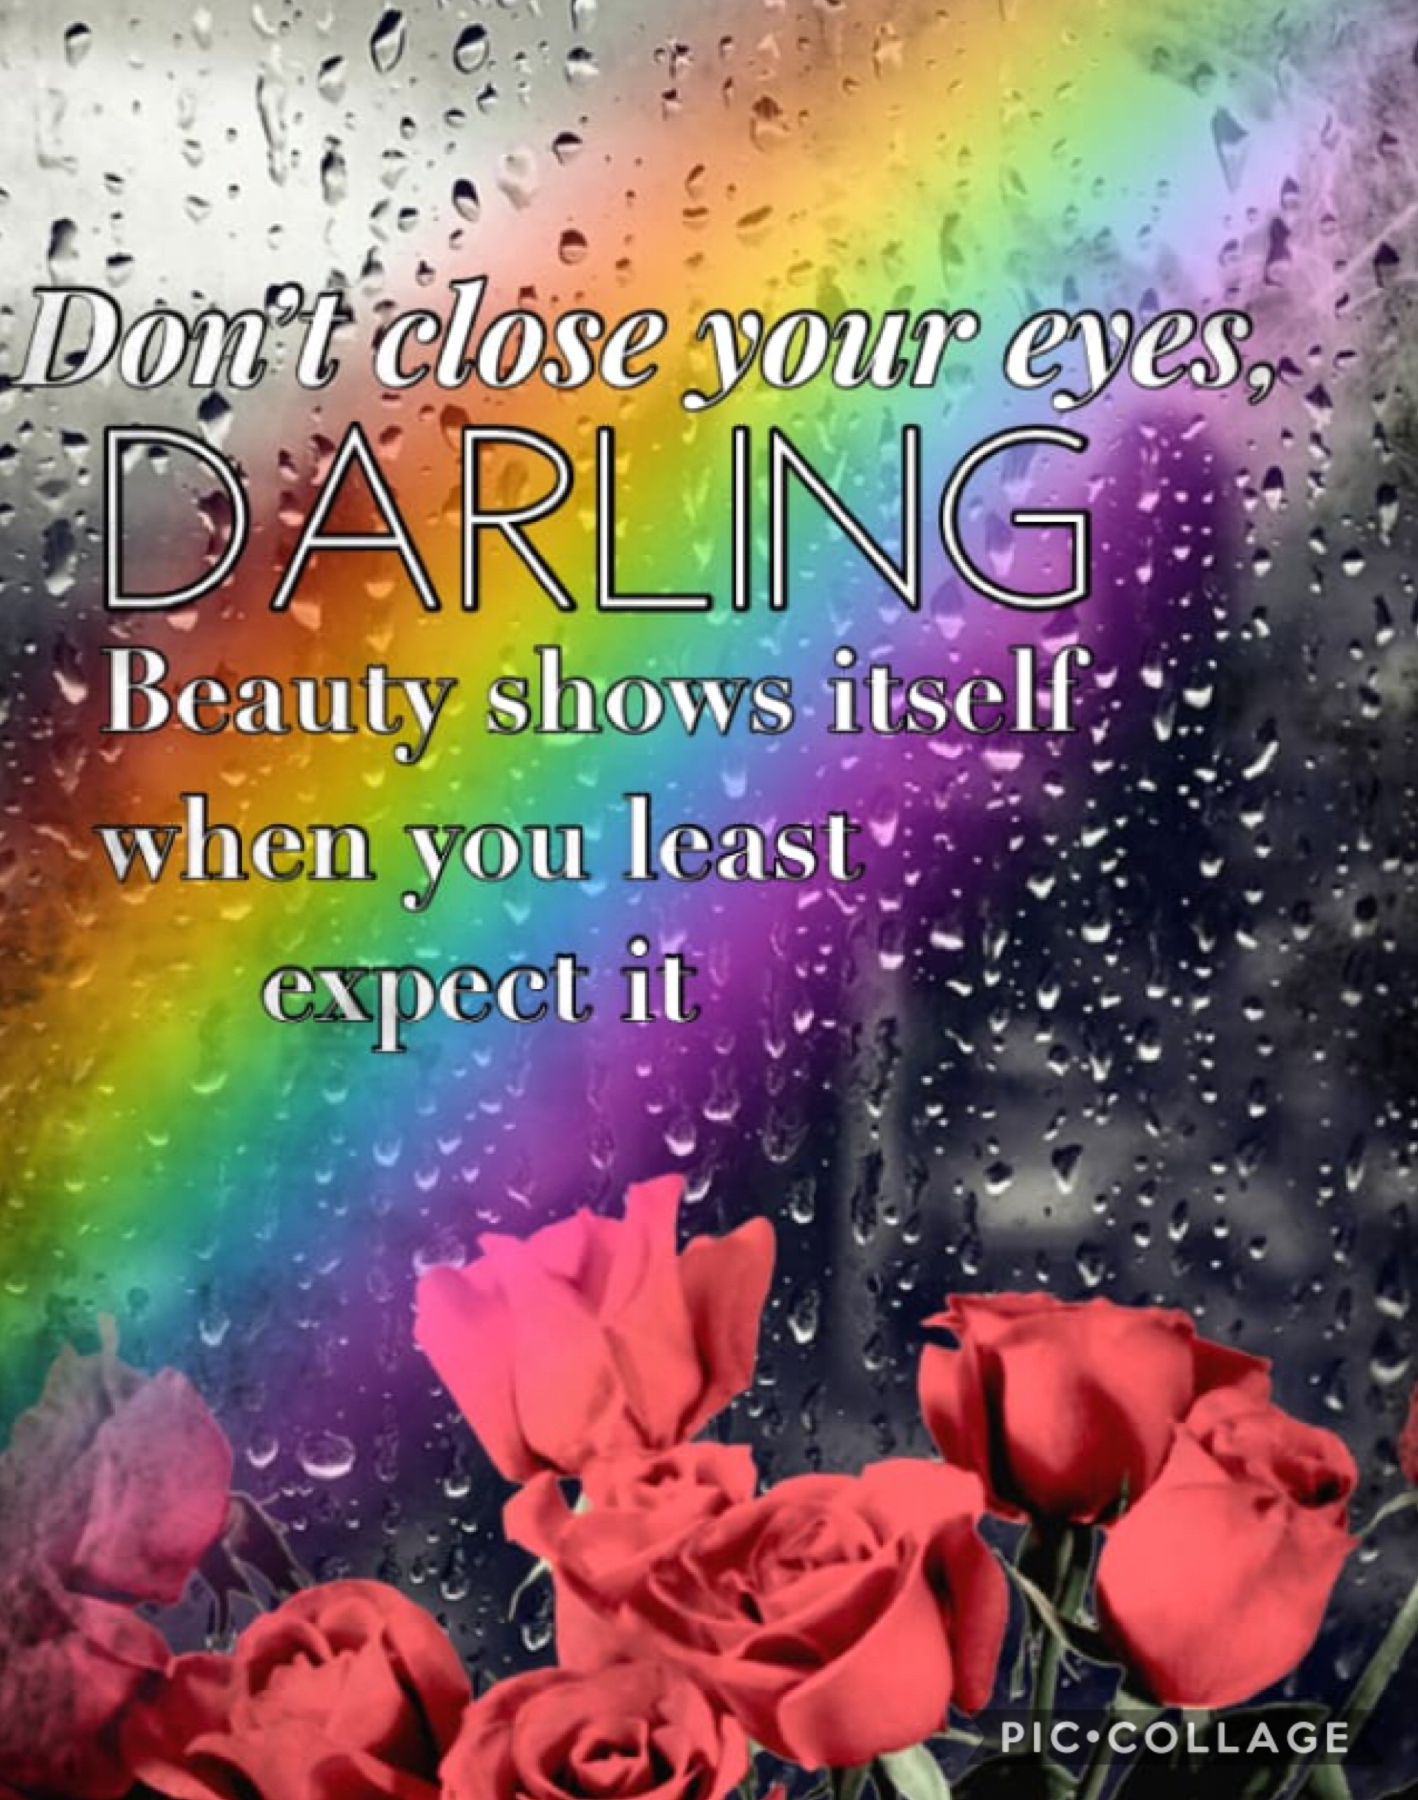 Don’t close your eyes, Darling.

——- 

Rainbows, spring, rain, roses, positivity 